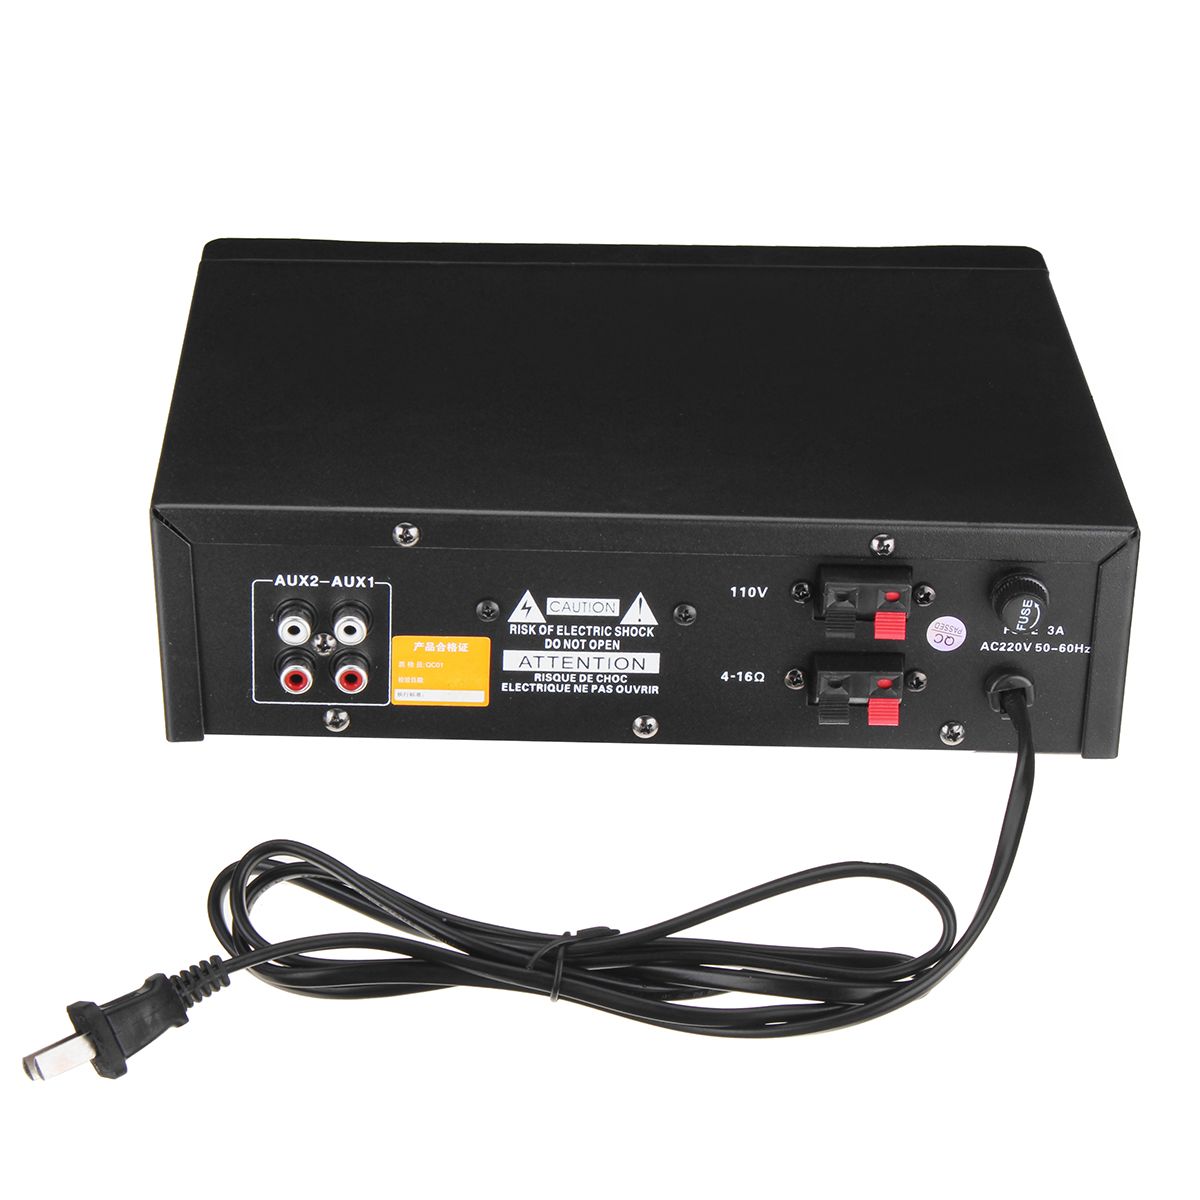 Kasen-LS-50U-2x50W-bluetooth-2CH-Stereo-Amplifier-Support-SD-Card-USB-FM-Microphone-1372540